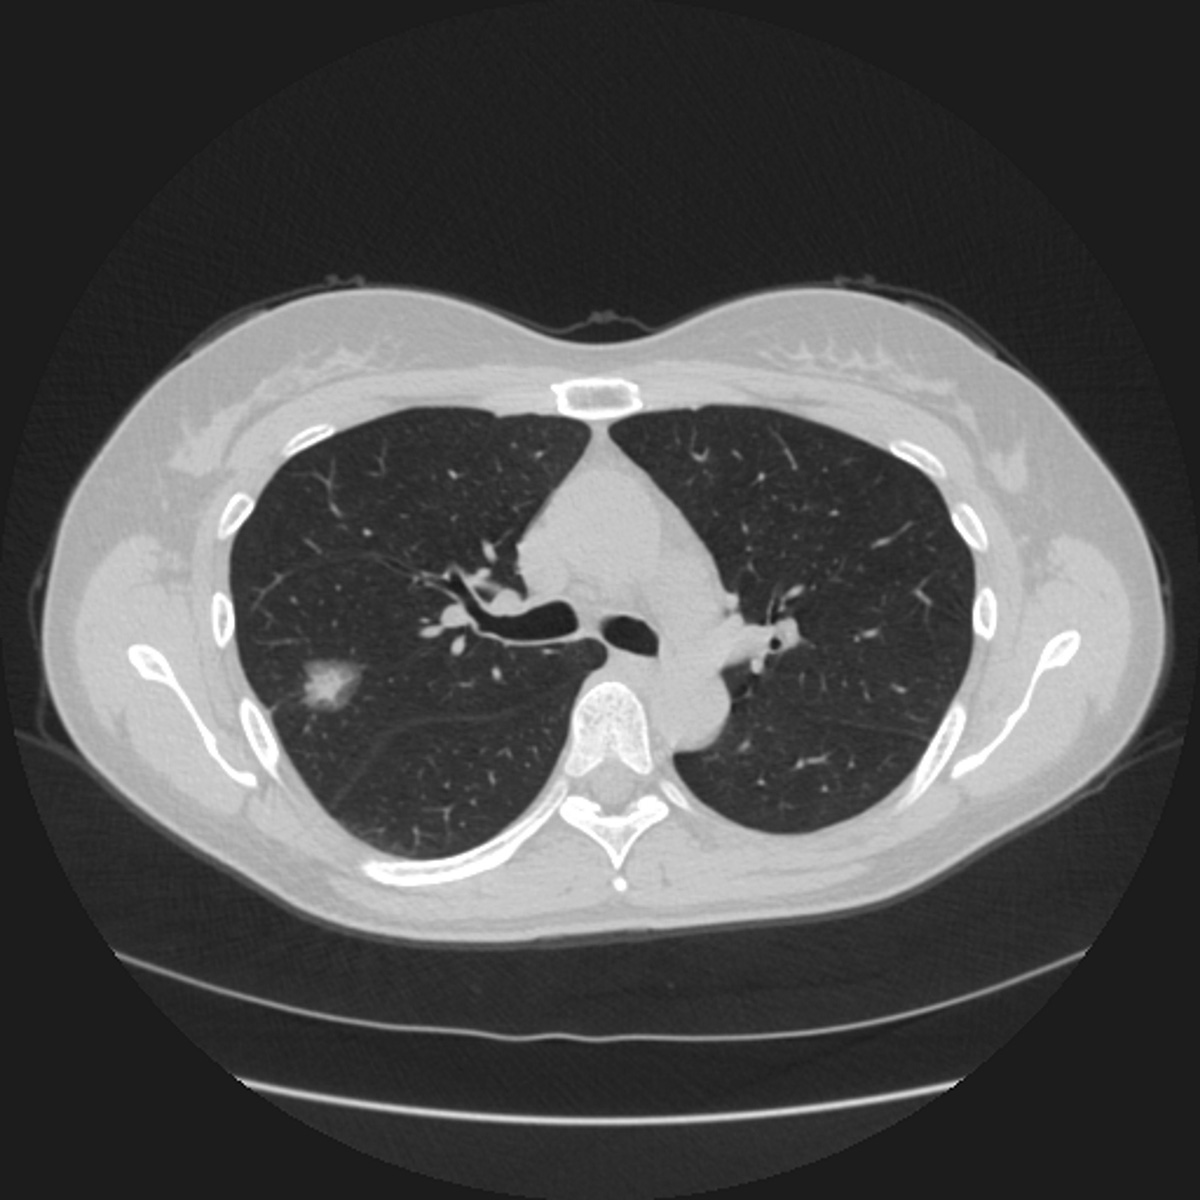 Image of nodule detected in CT scan